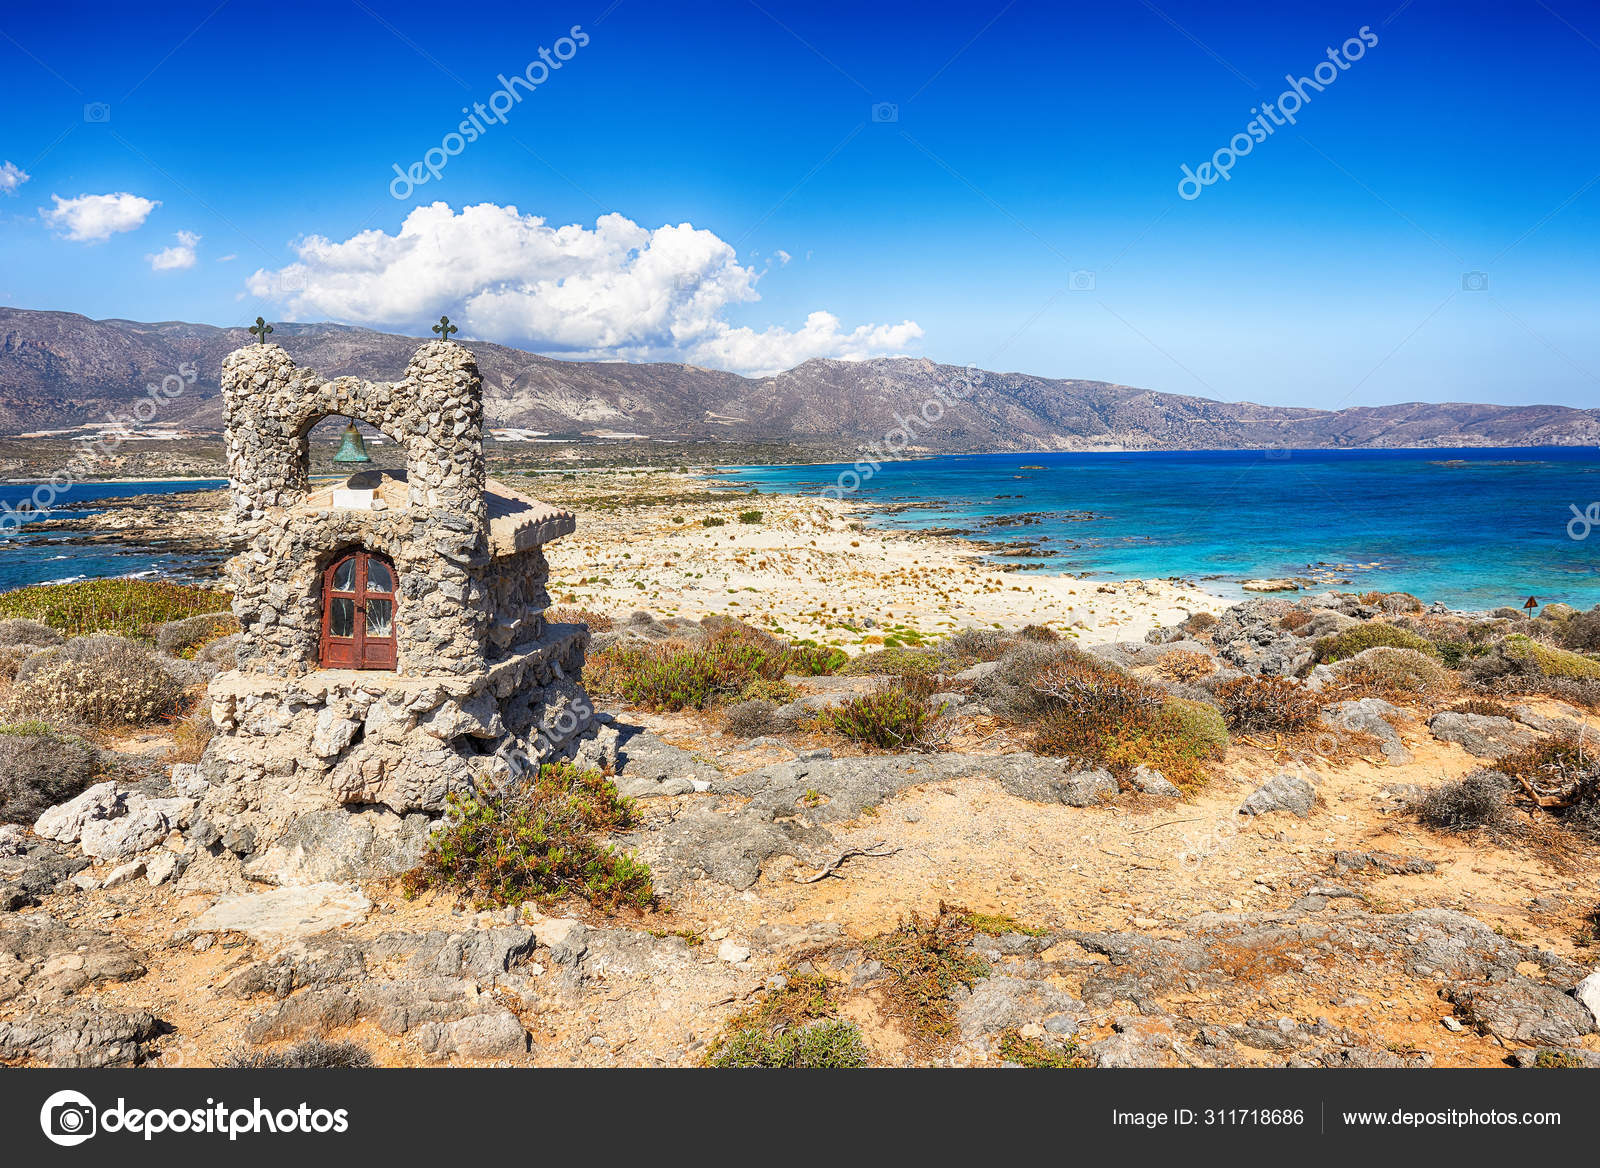 Sea Summer Landscape Coast Of The Greek Island. Mediterranean Sea